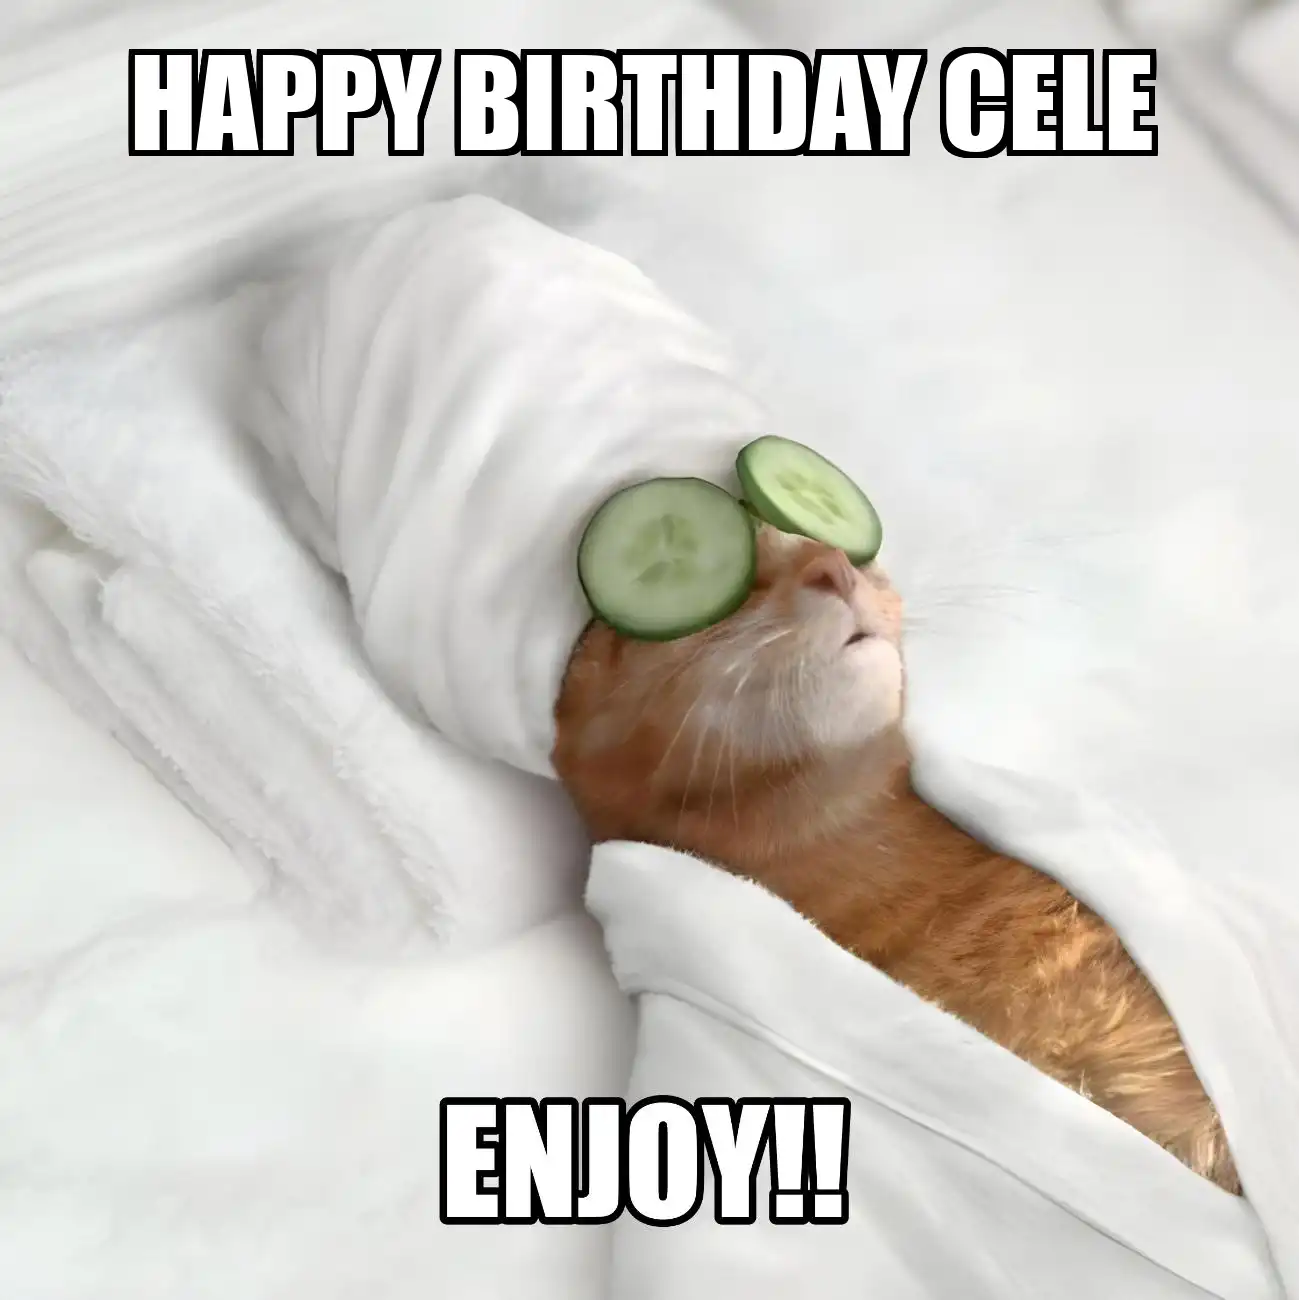 Happy Birthday Cele Enjoy Cat Meme